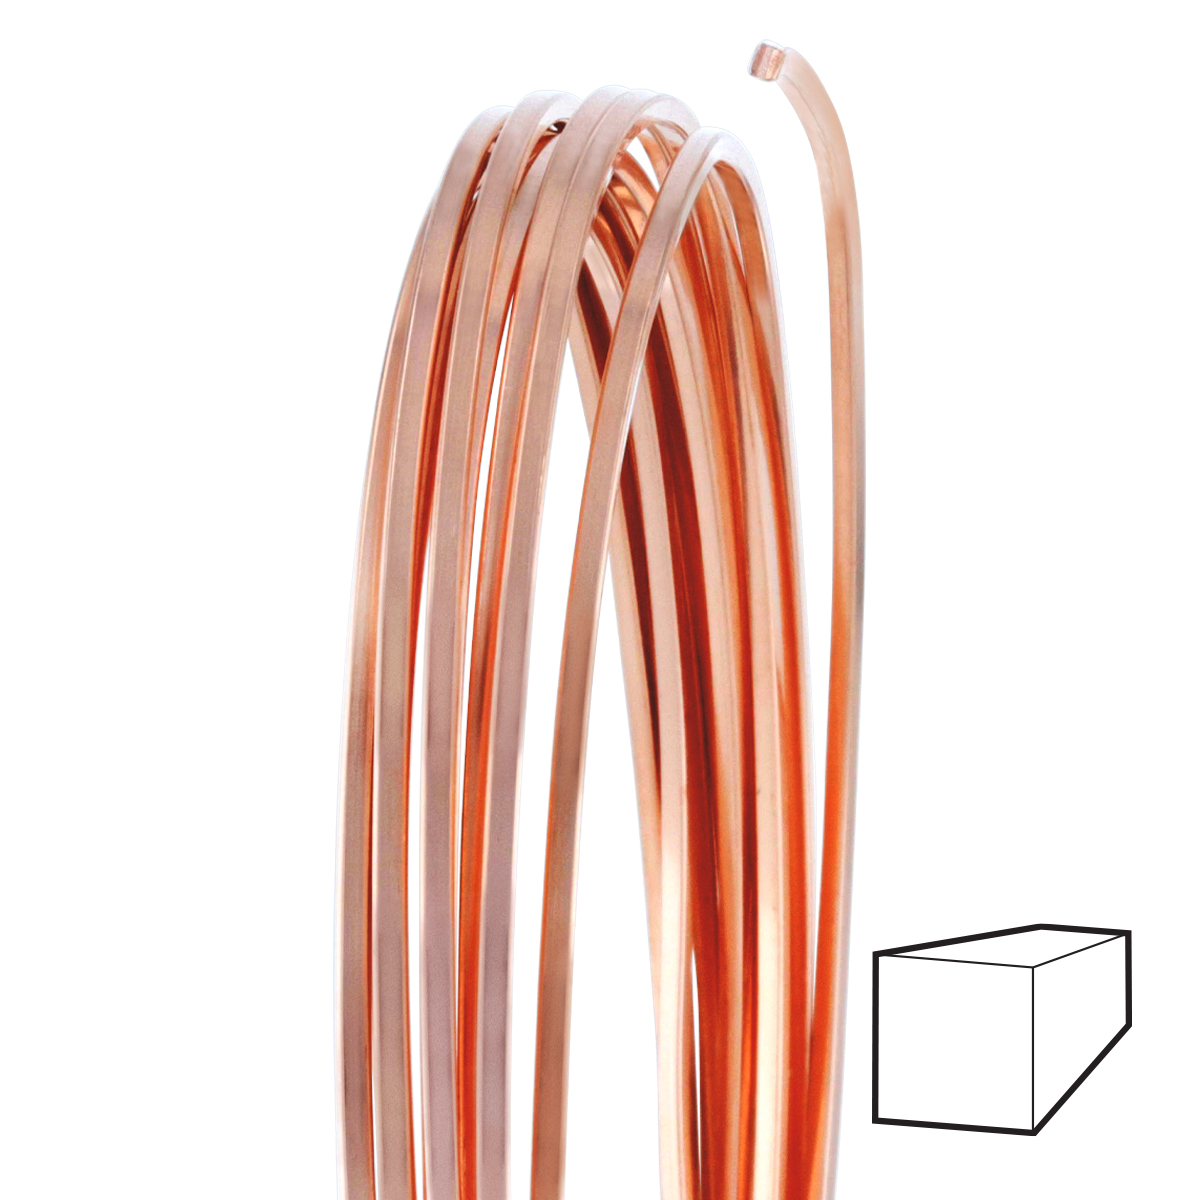 24 Gauge Square Half Hard Copper Wire: Wire Jewelry